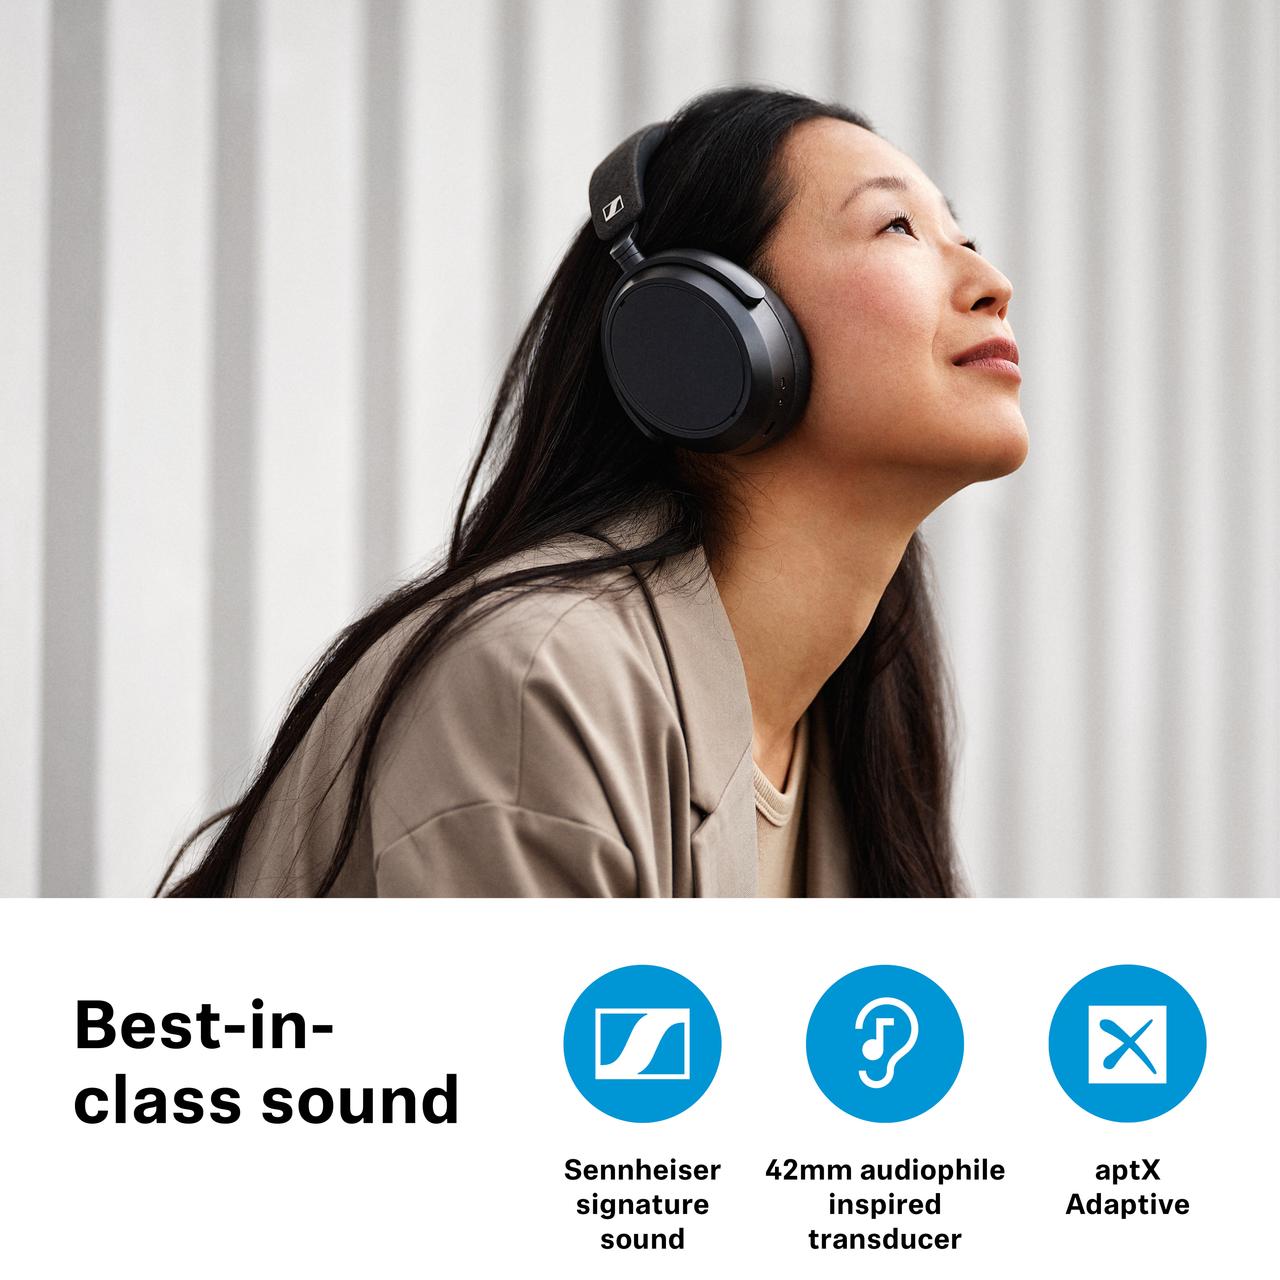 Sennheiser Momentum 4 Wireless review: Awesome audio, average ANC